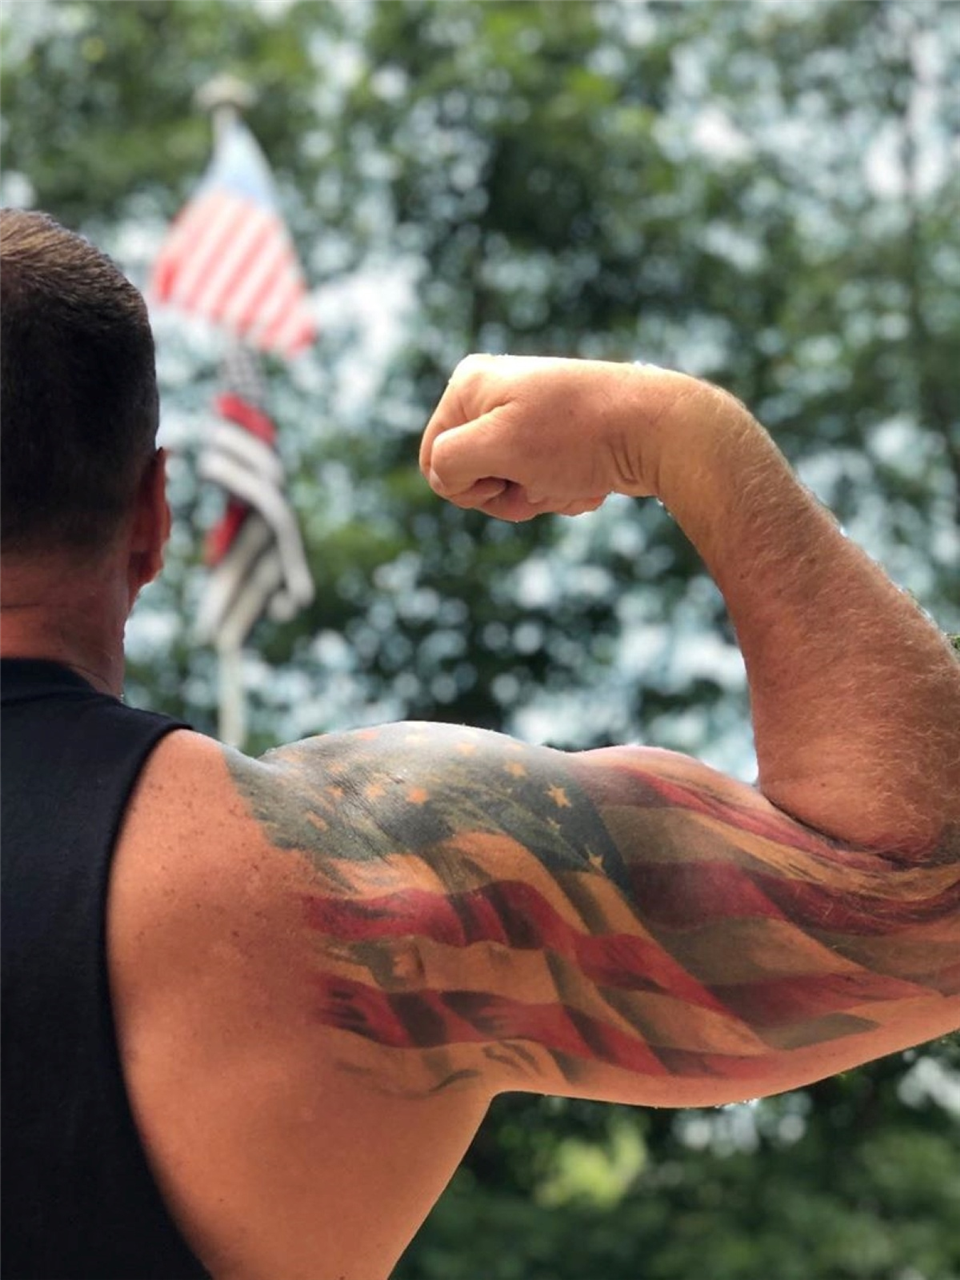 85 Best Patriotic American Flag Tattoos  I Love USA 2019